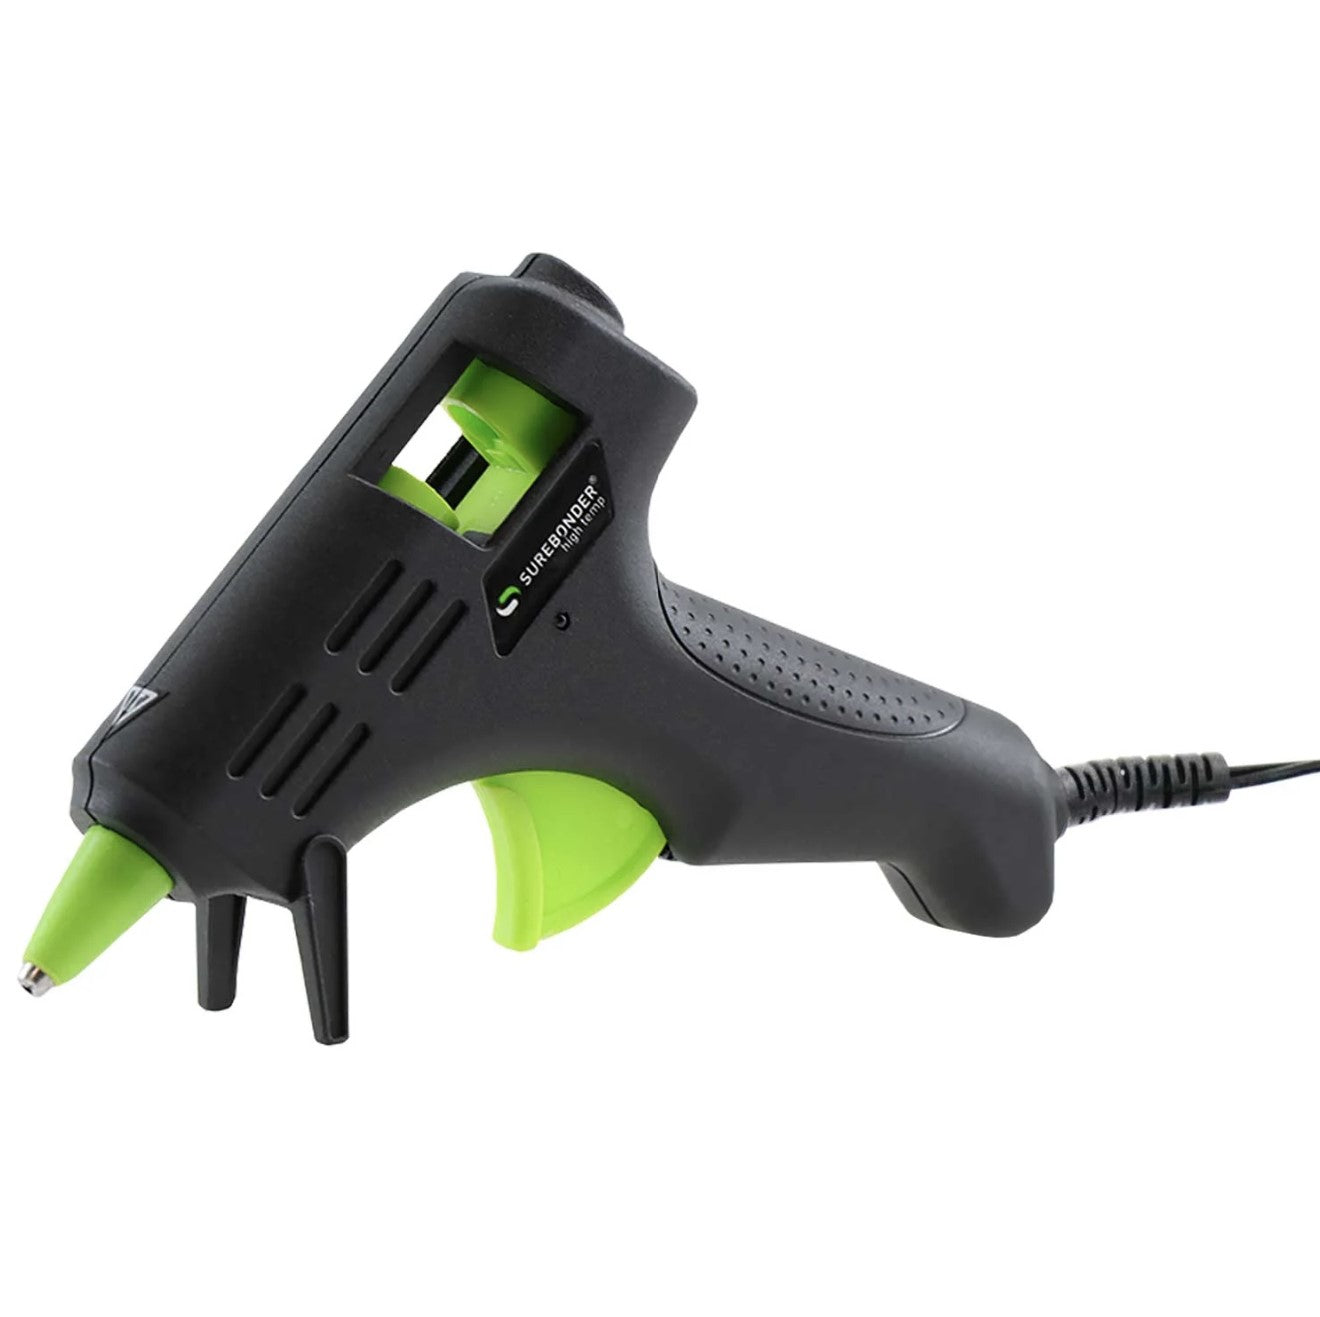 Mini Size High Temp Glue Gun, 10 Watt (Ref. GM-160), Black Colored Essentials Series by Surebonder®